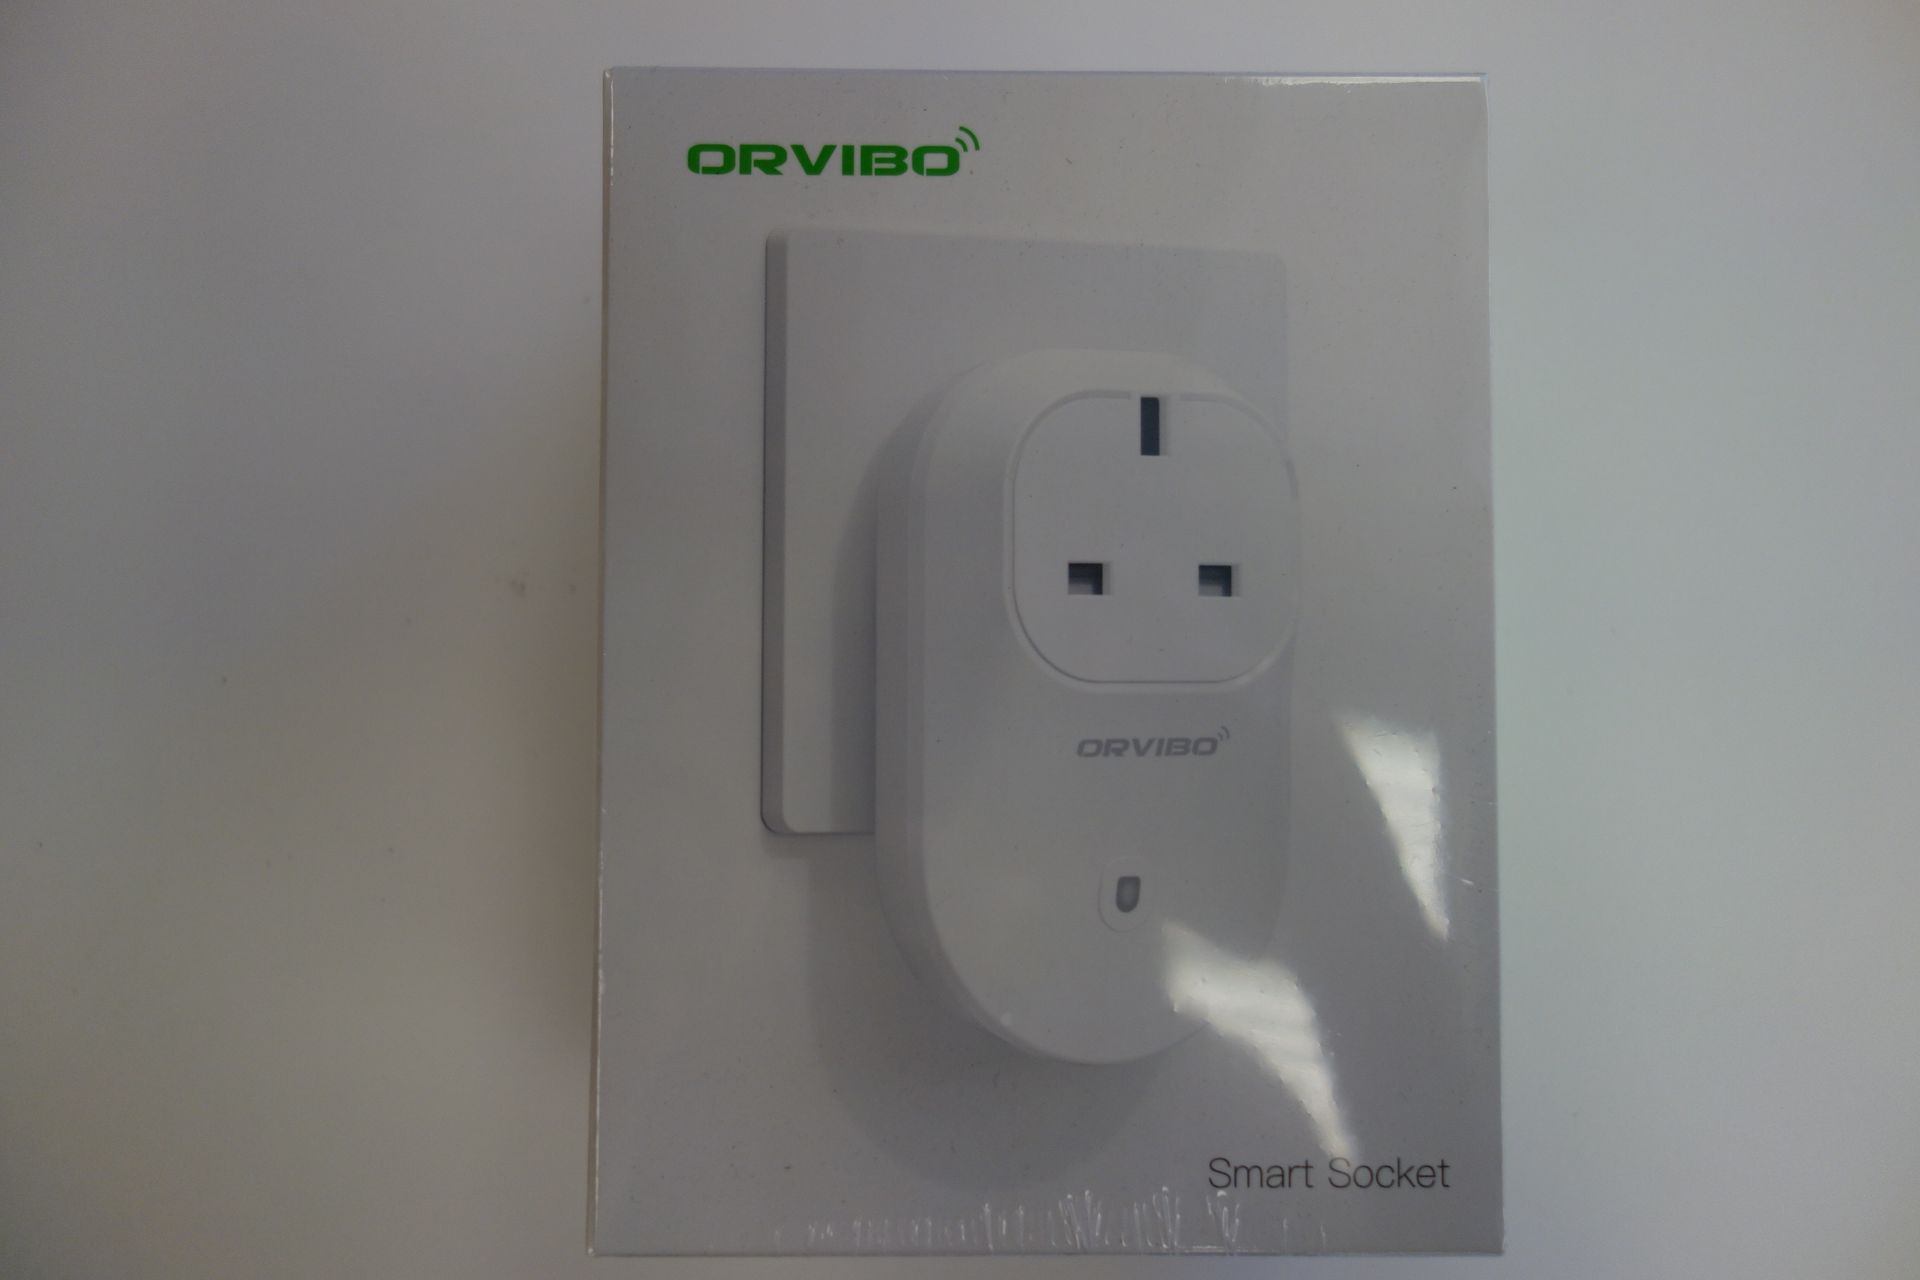 10 X ORVIBO B25UK Smart Socket UK Connect Lamps Heaters + Appliances to ORVIBO Smart Socket + Turn